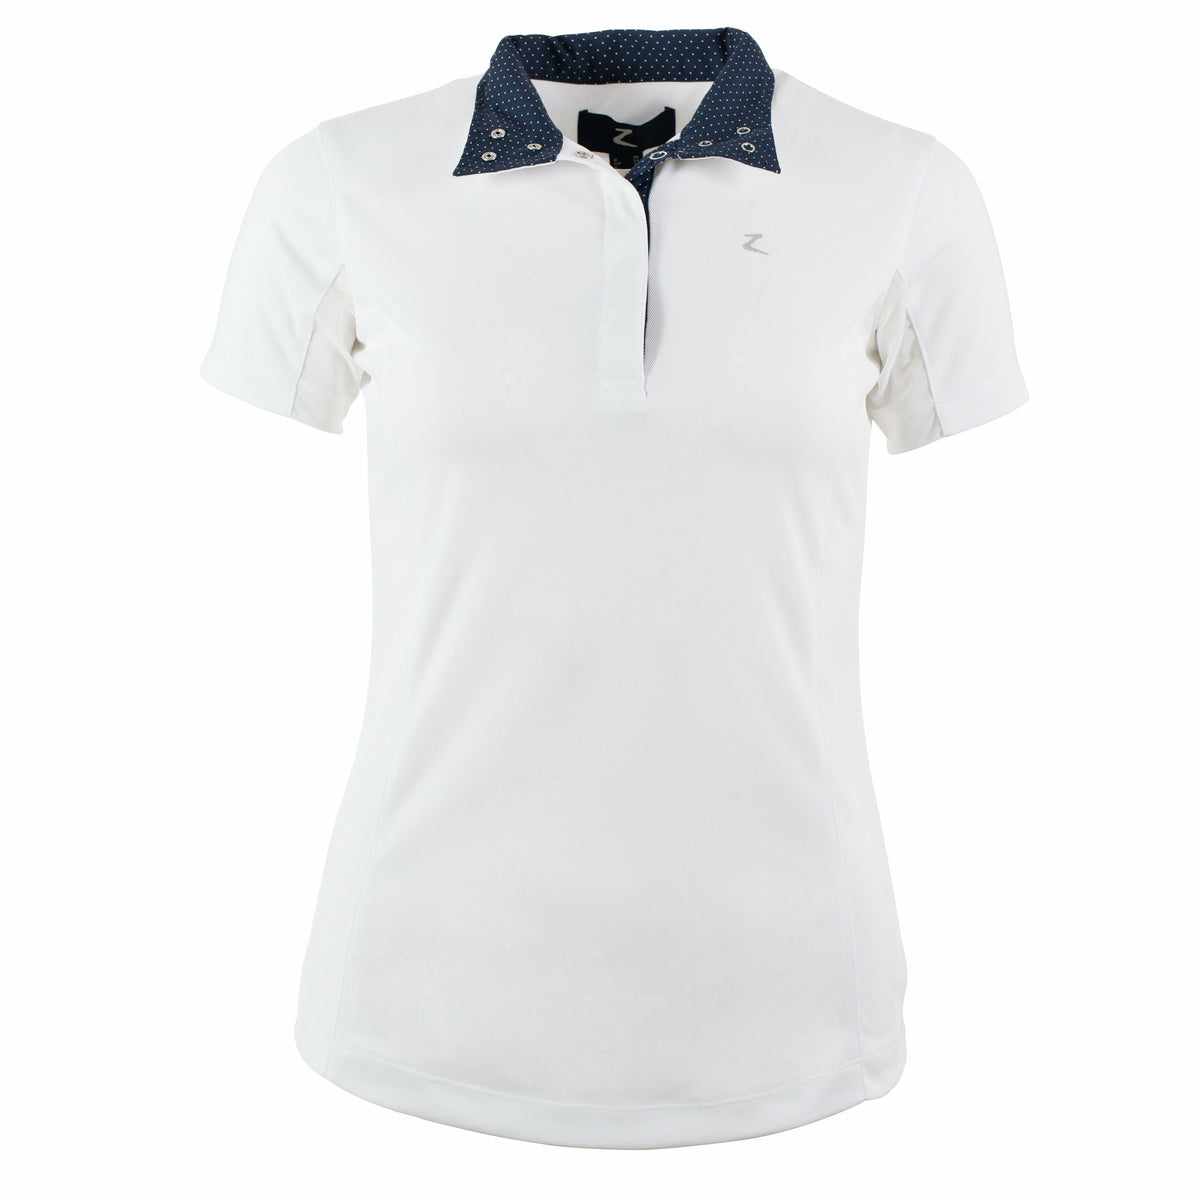 HORZE CLOTHING Horze Blaire Short Sleeve Show Shirt White